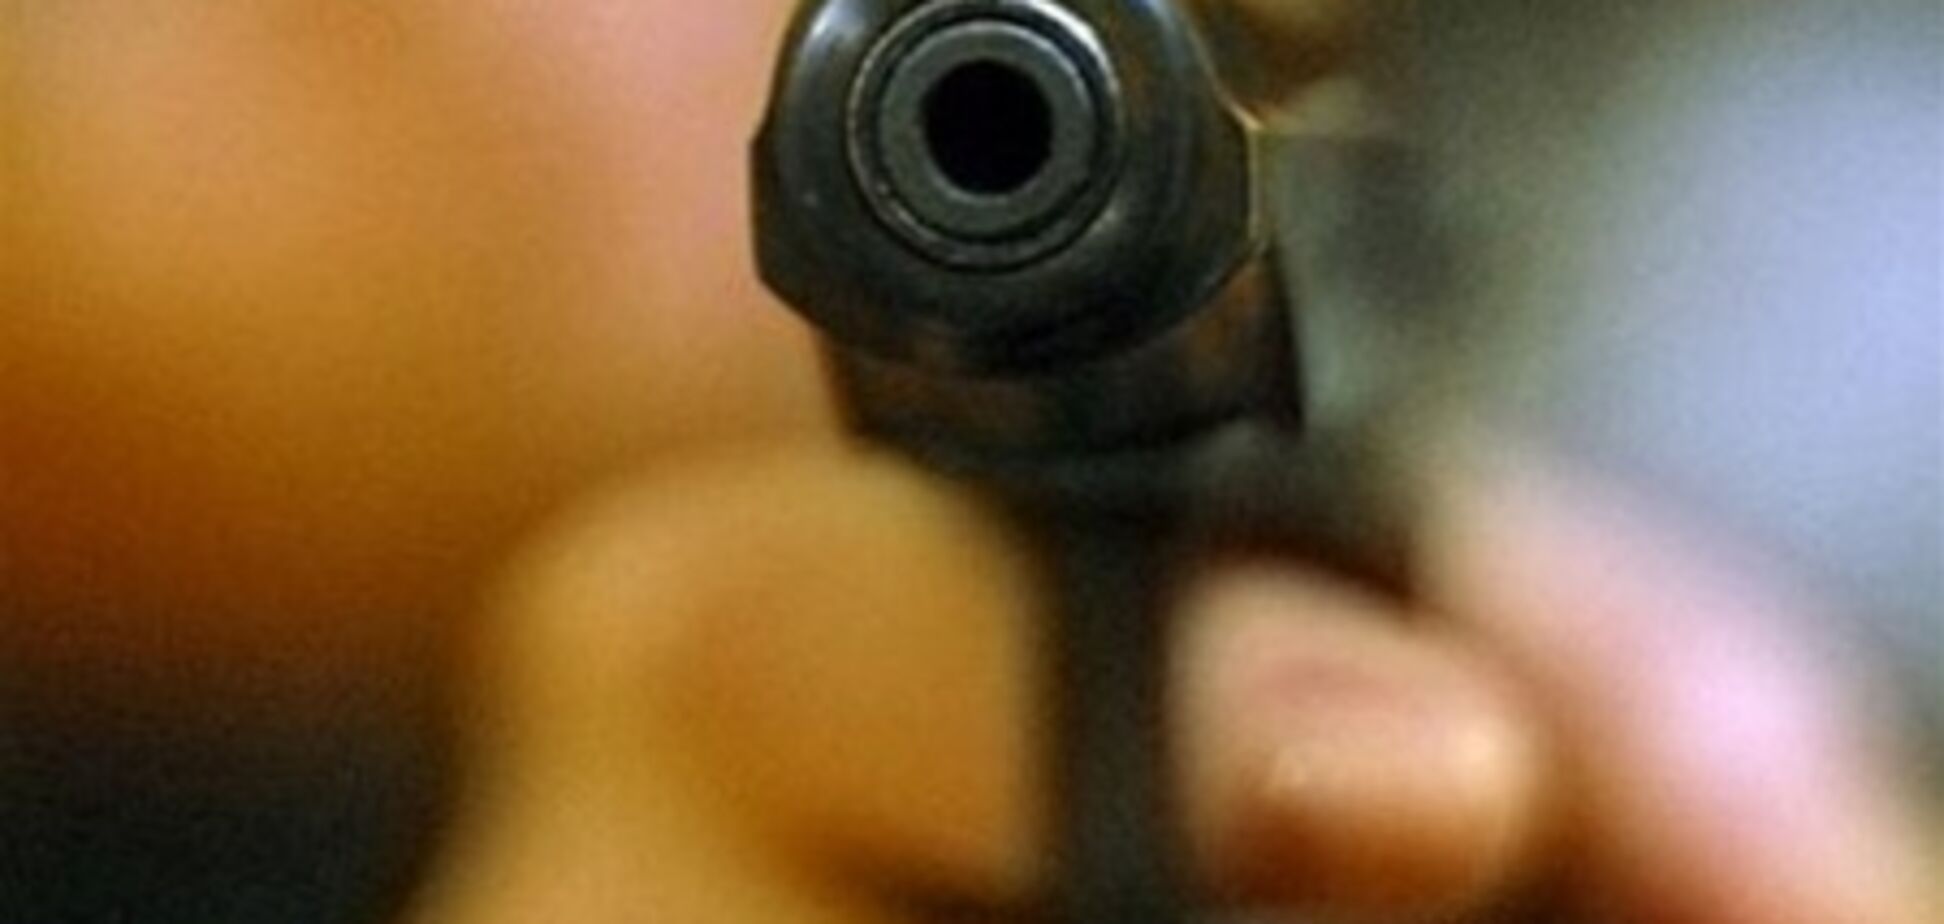 Днепропетровскому стрелку грозит до семи лет